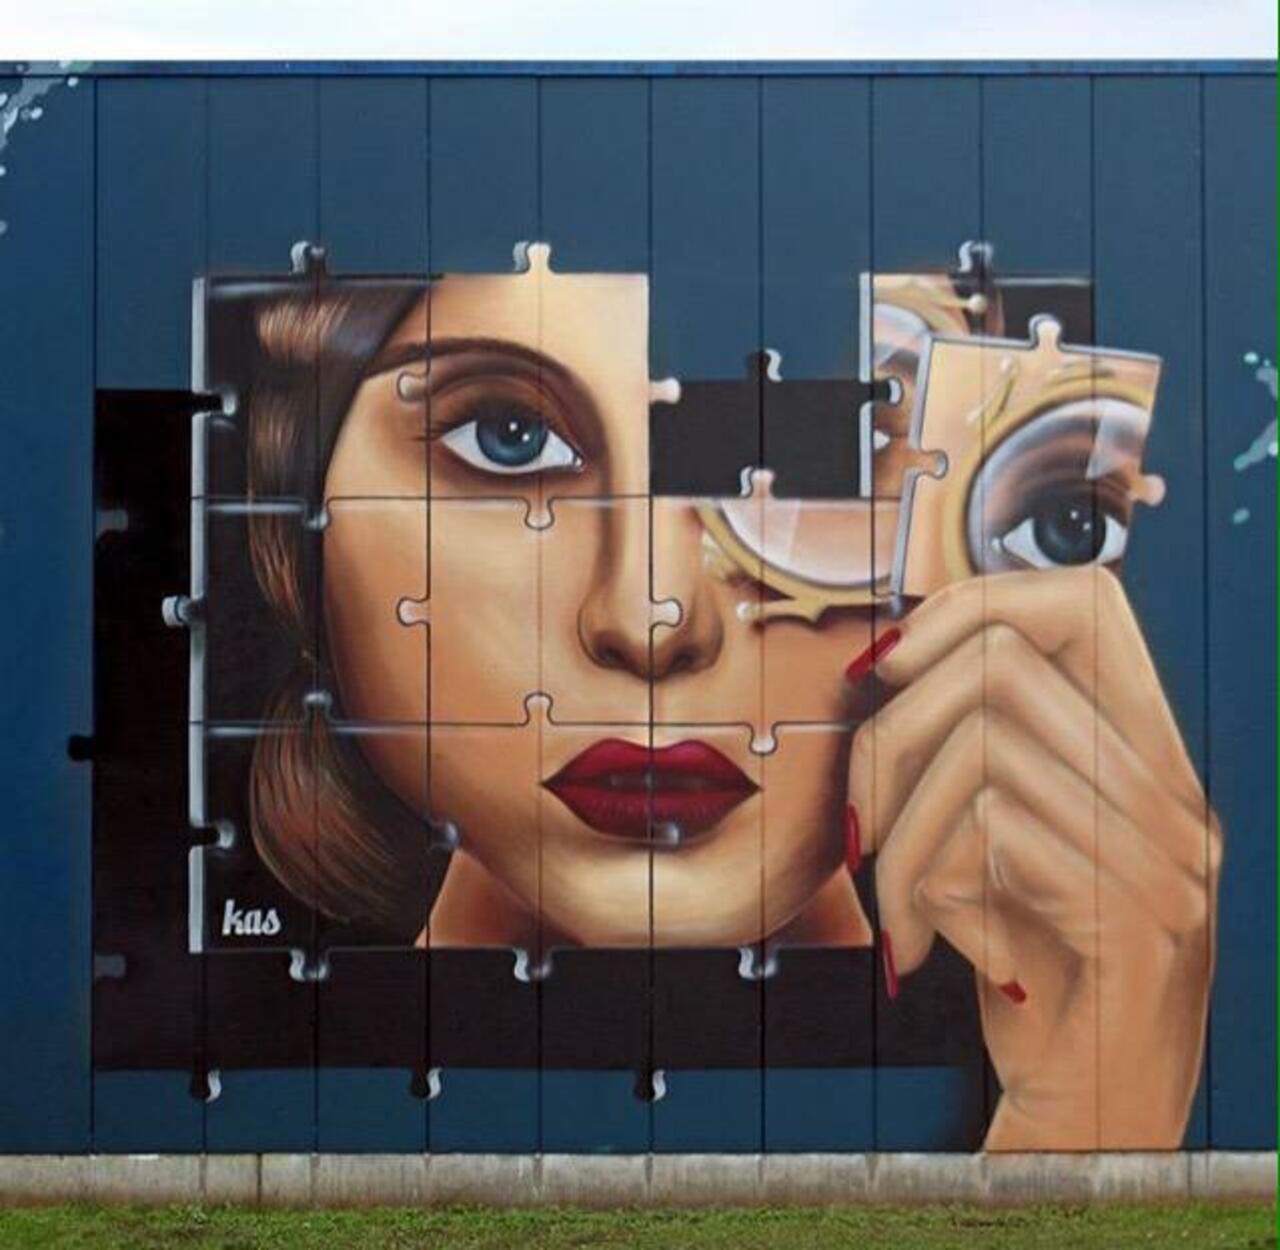 Kas Art's new Street Art "Piece of me" in Aalst Belgium 

#art #graffiti #mural #streetart http://t.co/kkPhLRqLon